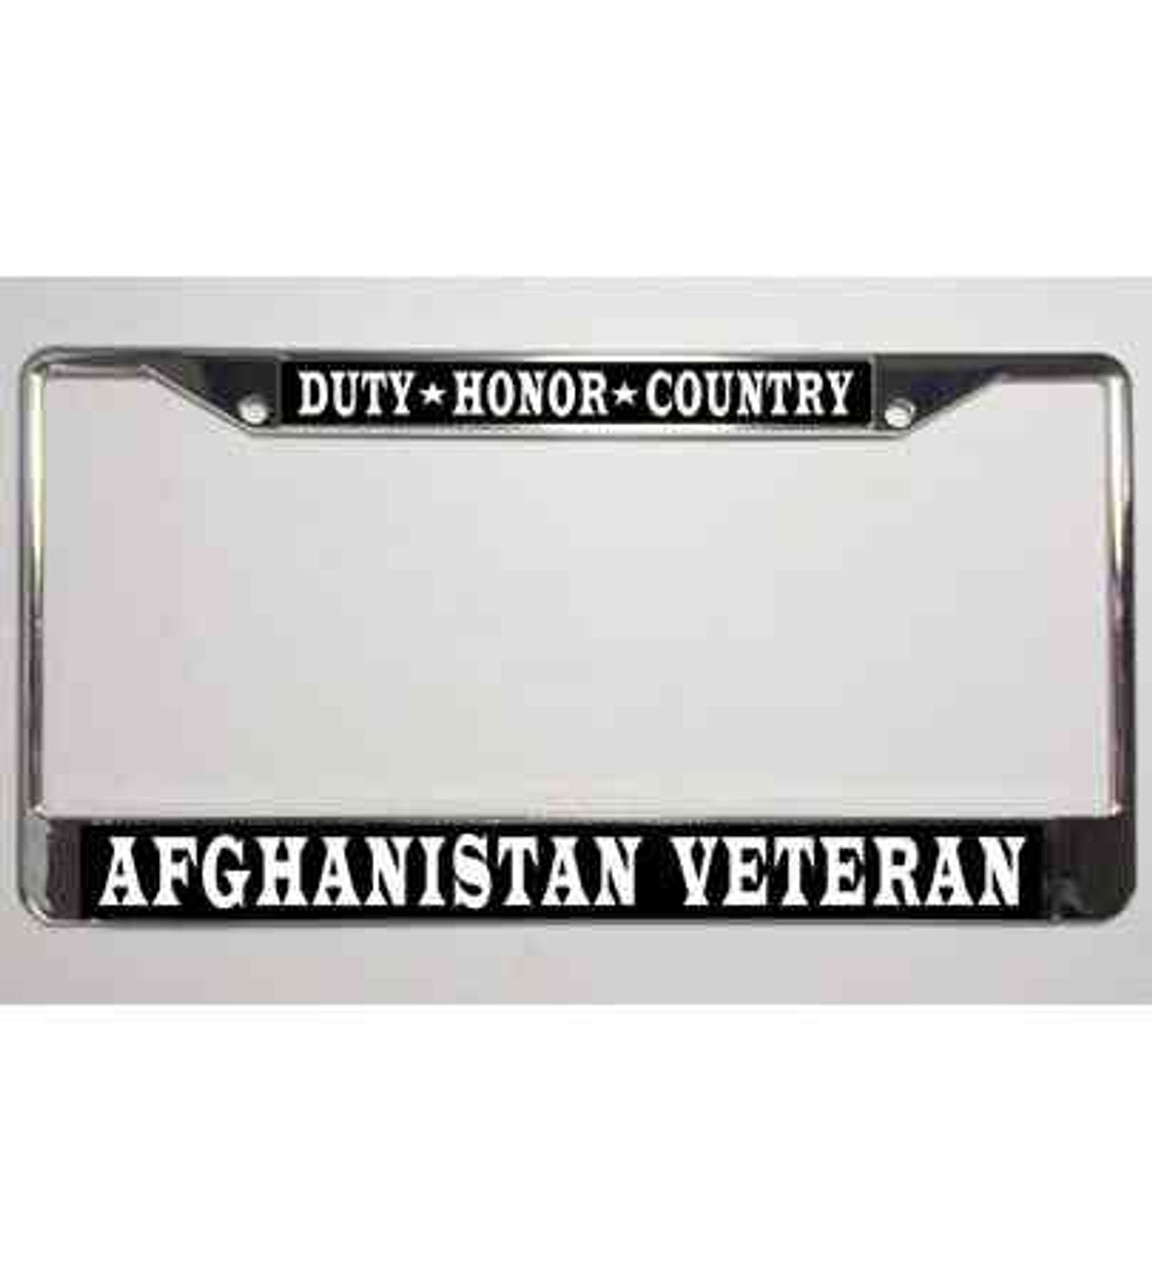 afghanistan veteran dutyhonorcountry license plate frame